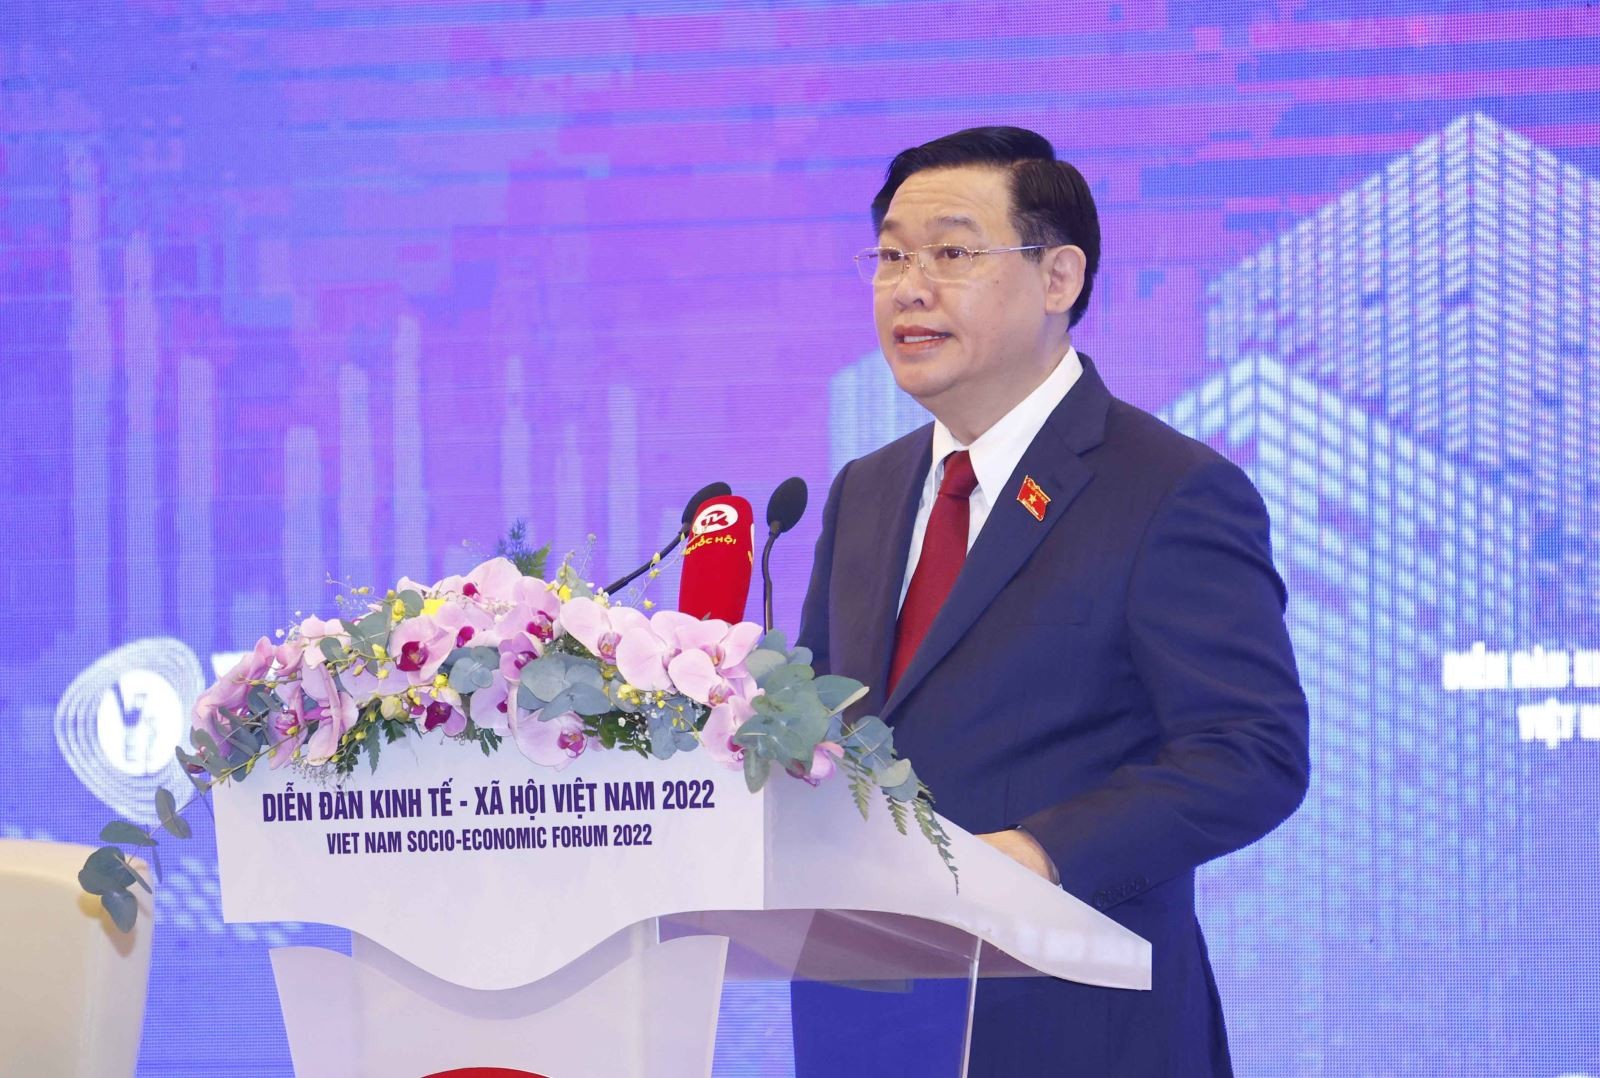 400 delegates to attend Vietnam Socio-Economic Forum 2022